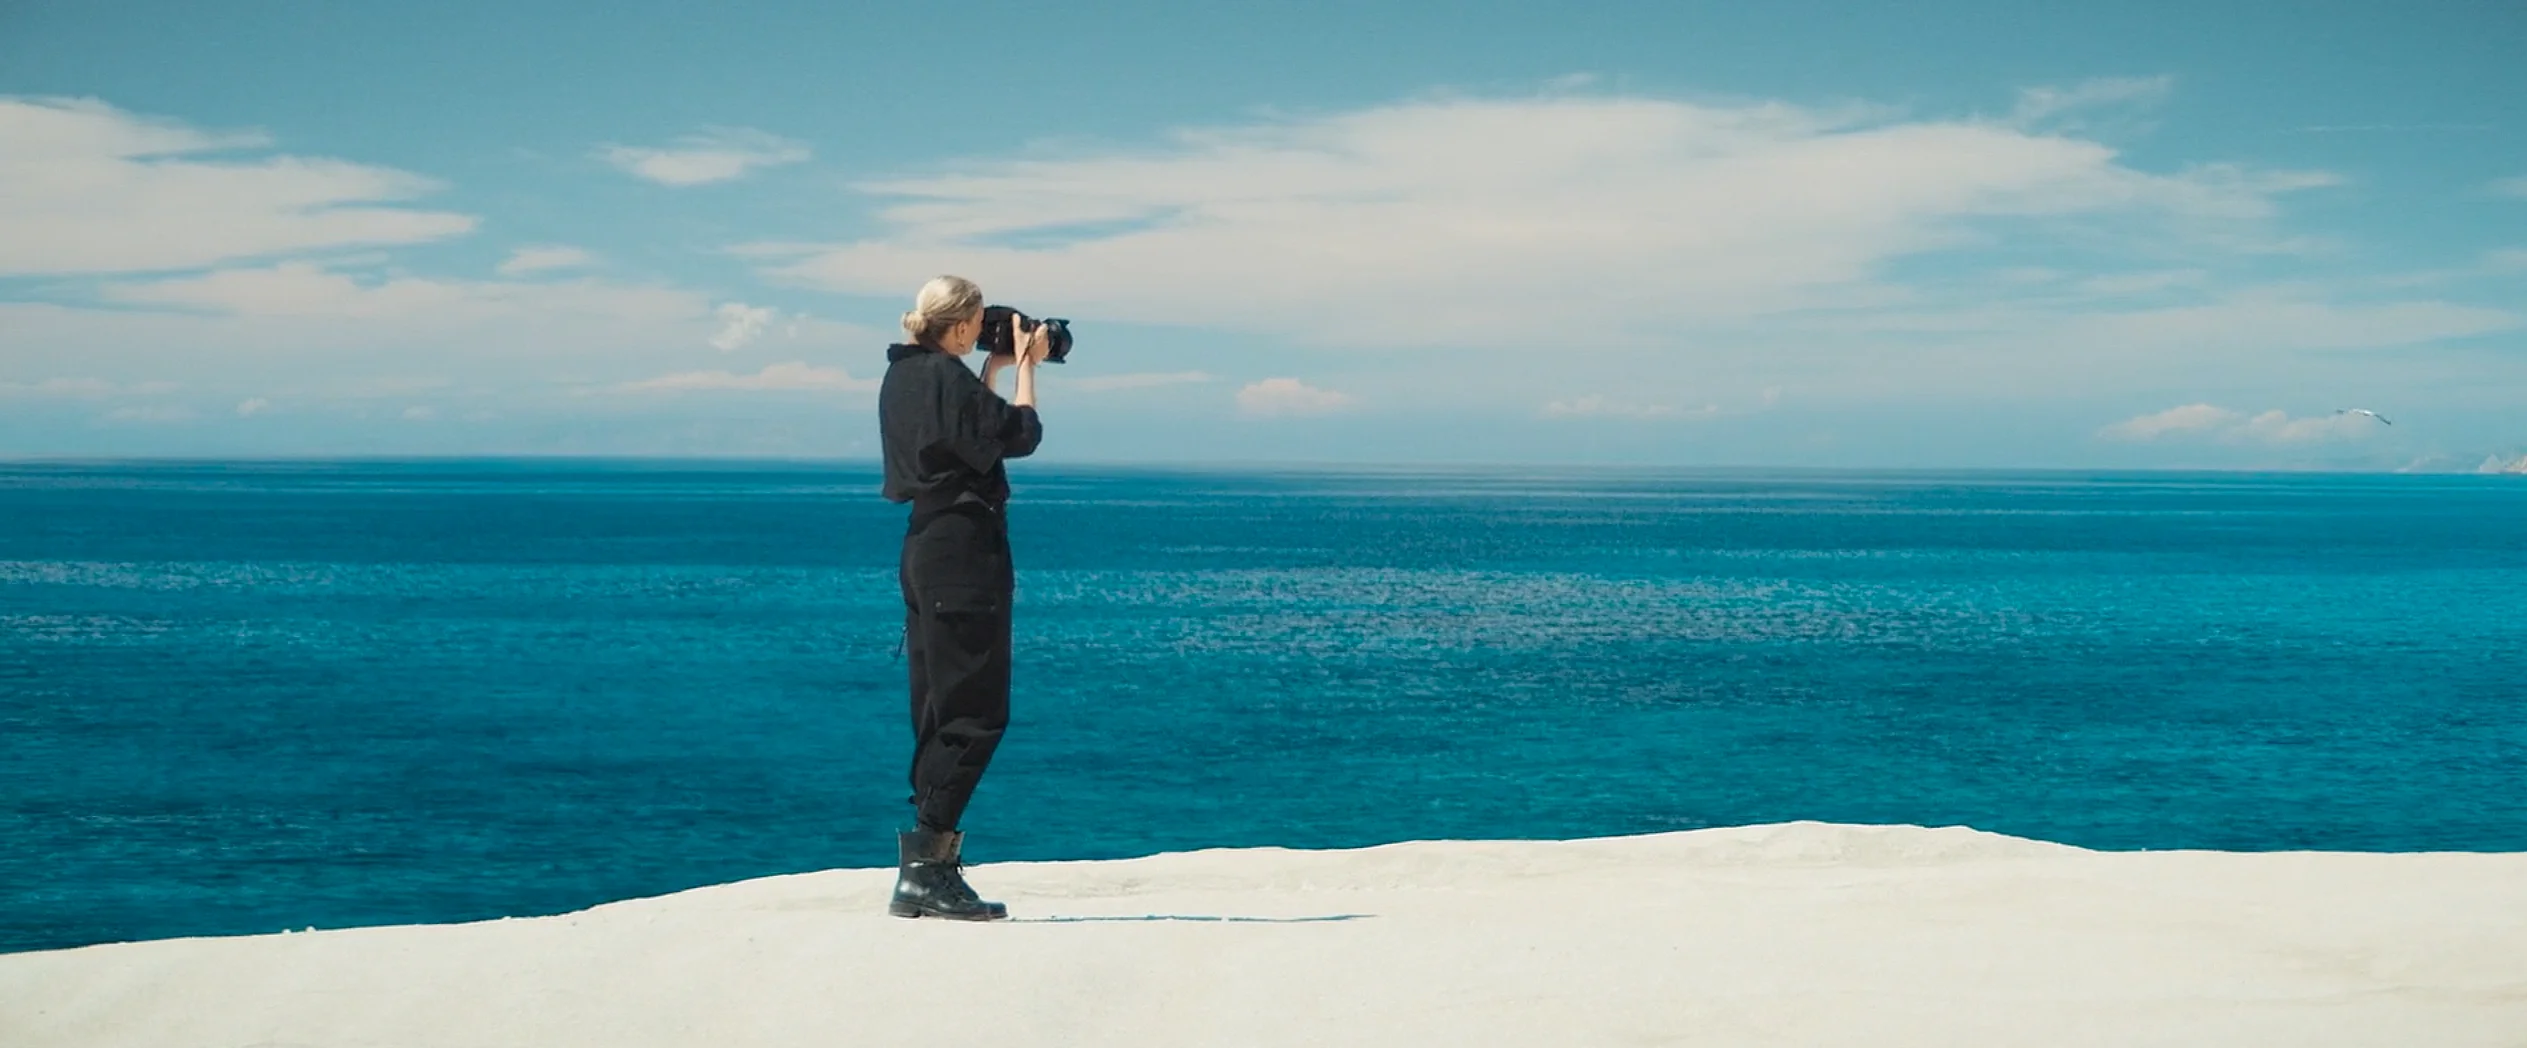 Louis Vuitton - Towards a Dream Campaign on Vimeo